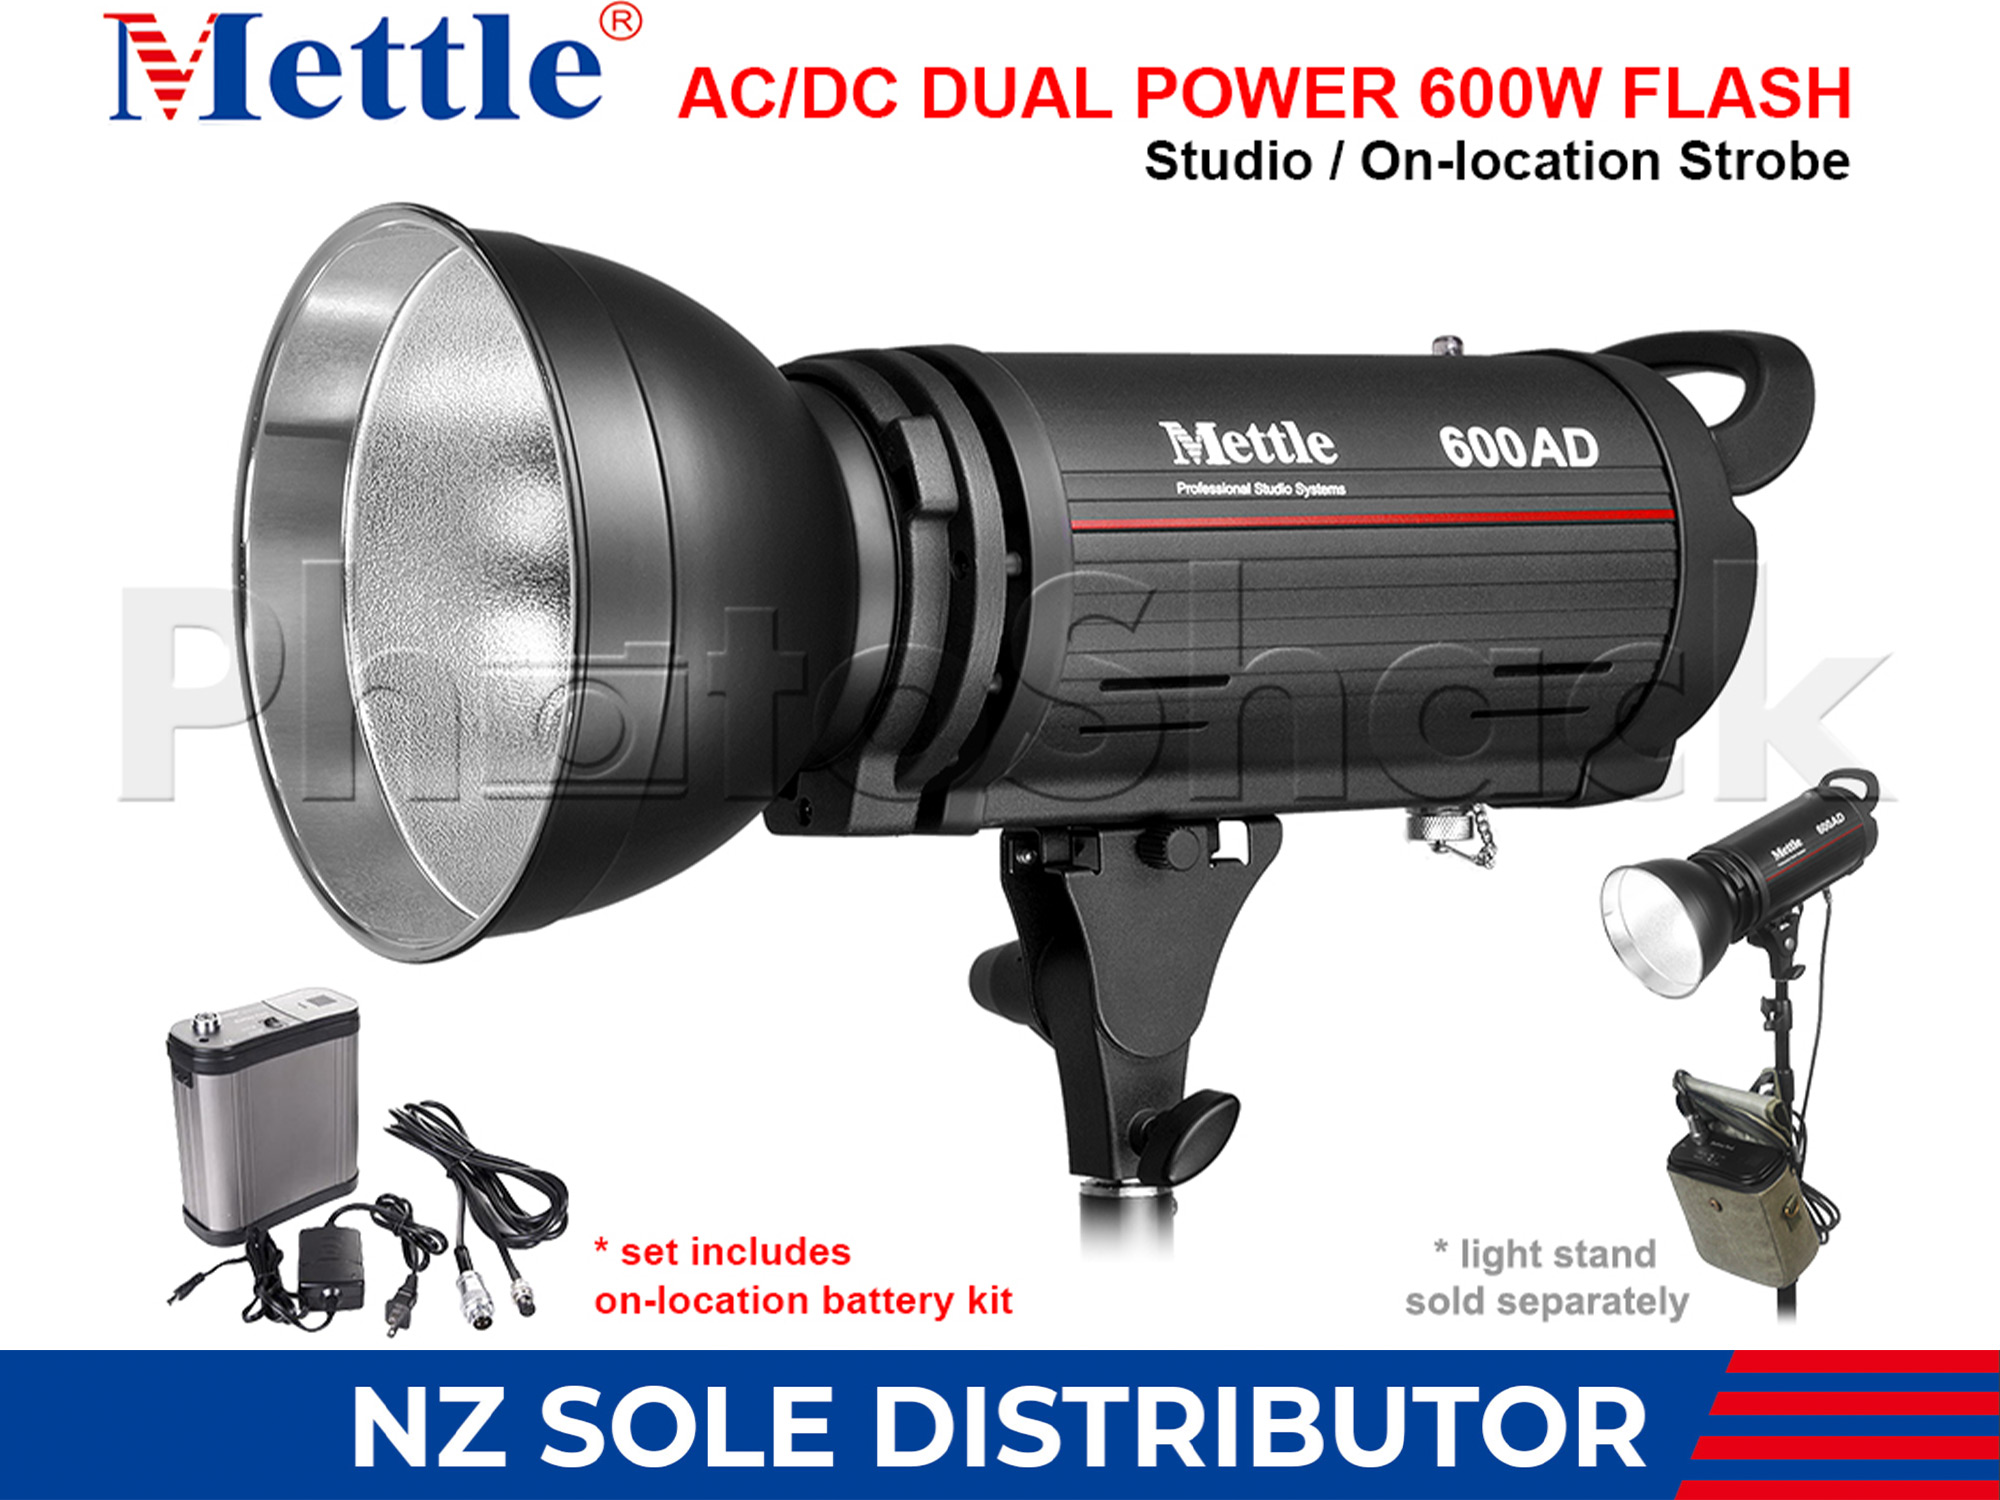 Studio Flash - 600W - AC/DC Dual Power - Mettle 600AD